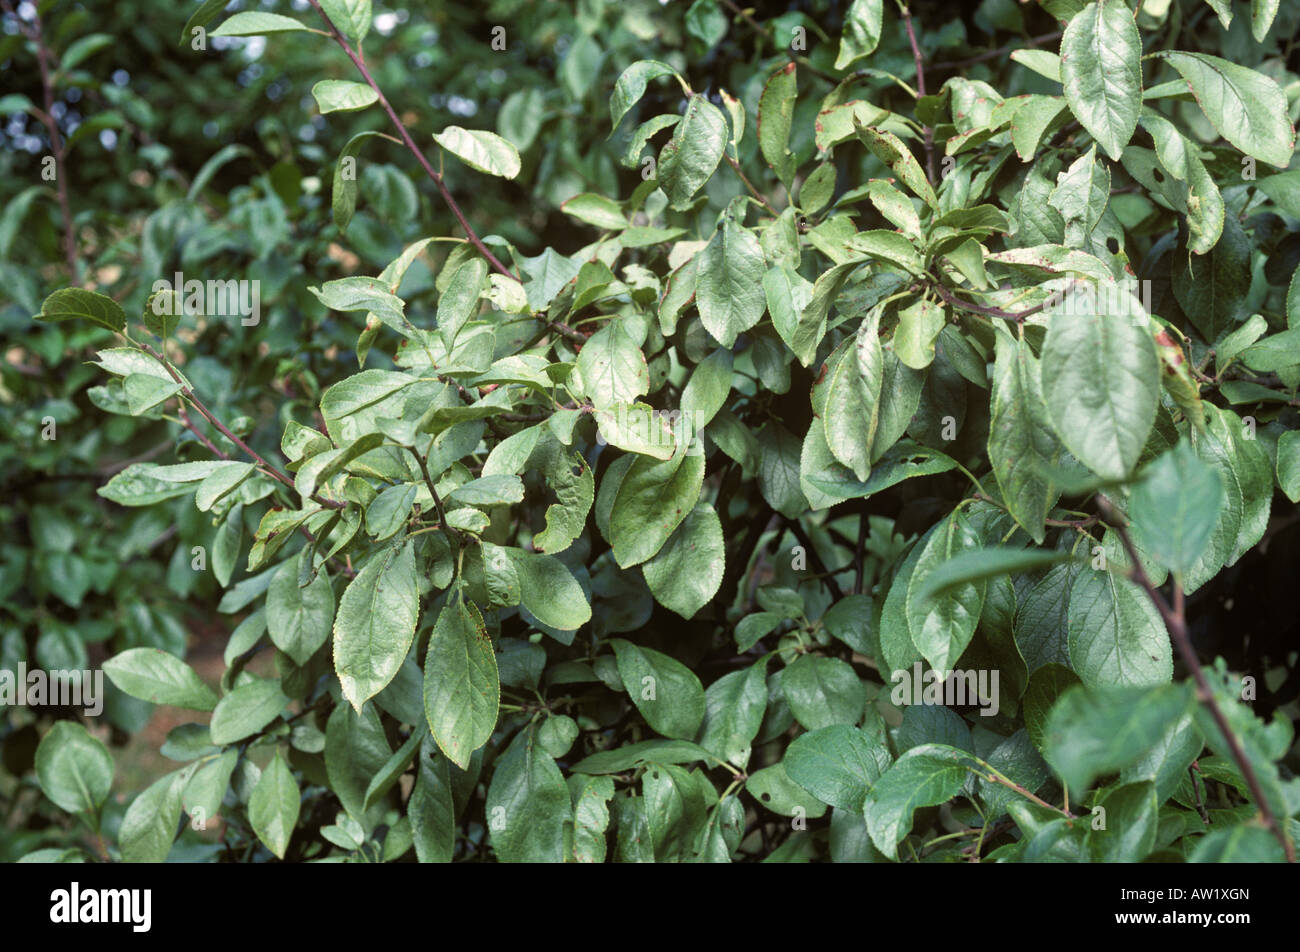 Silver leaf Chondrostereum purpureum infection symptoms on plum tree leaves Stock Photo